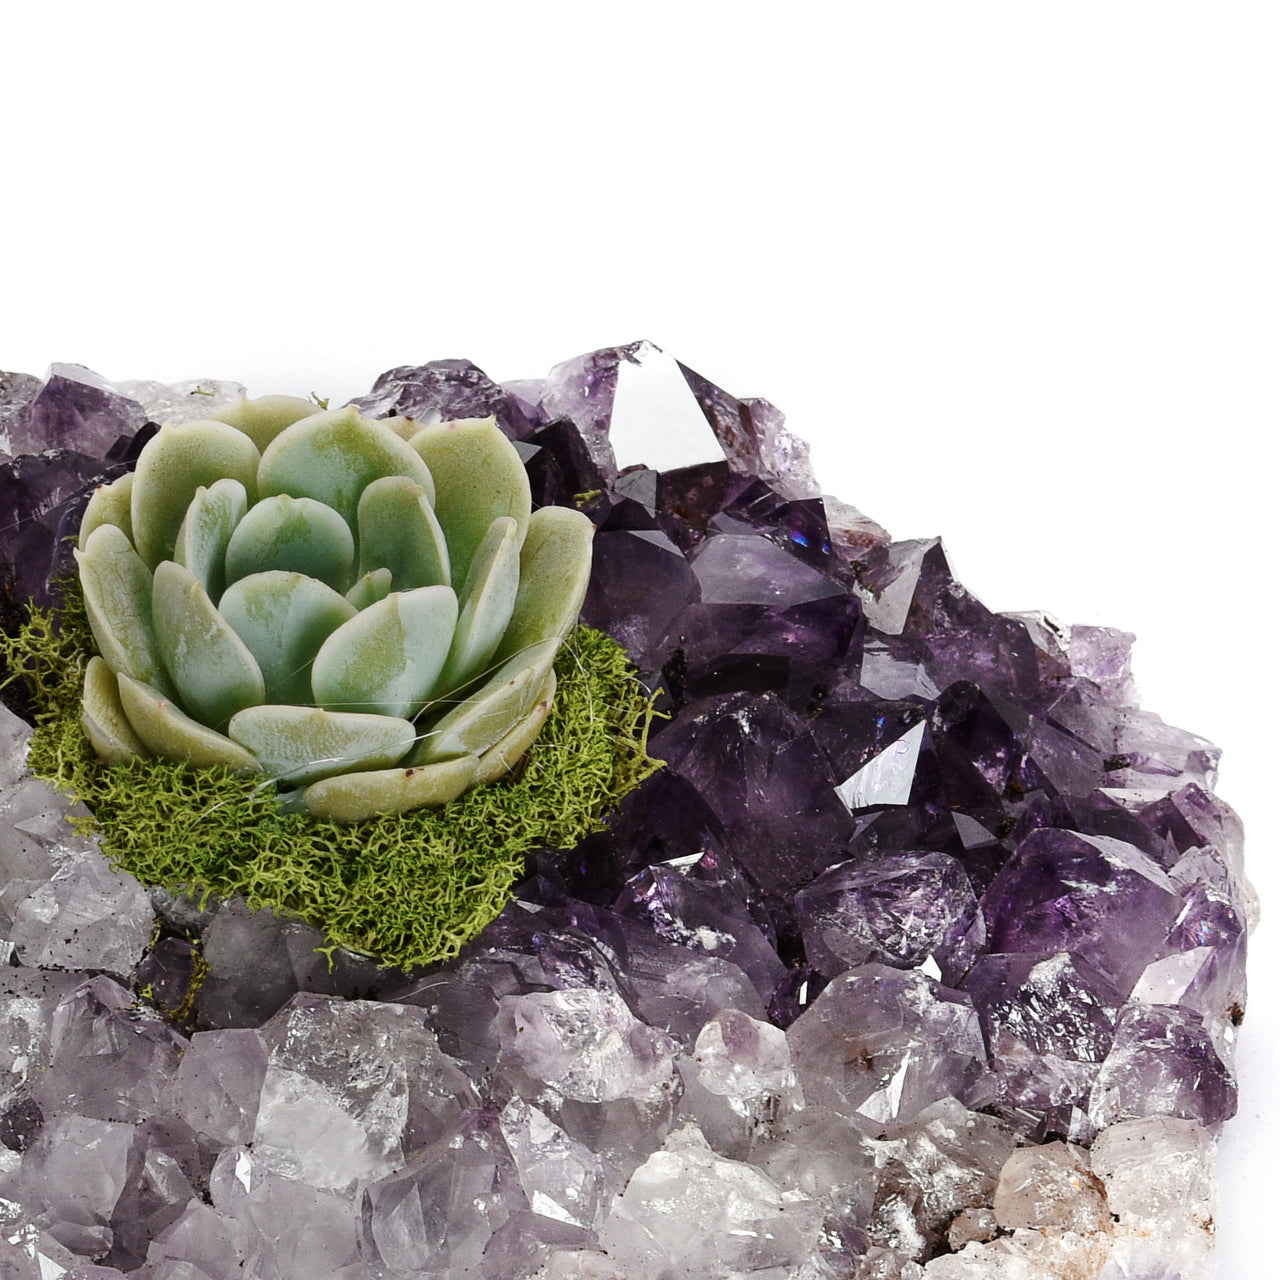 Amethyst Crystal with Succulent (5" W x 5" H)